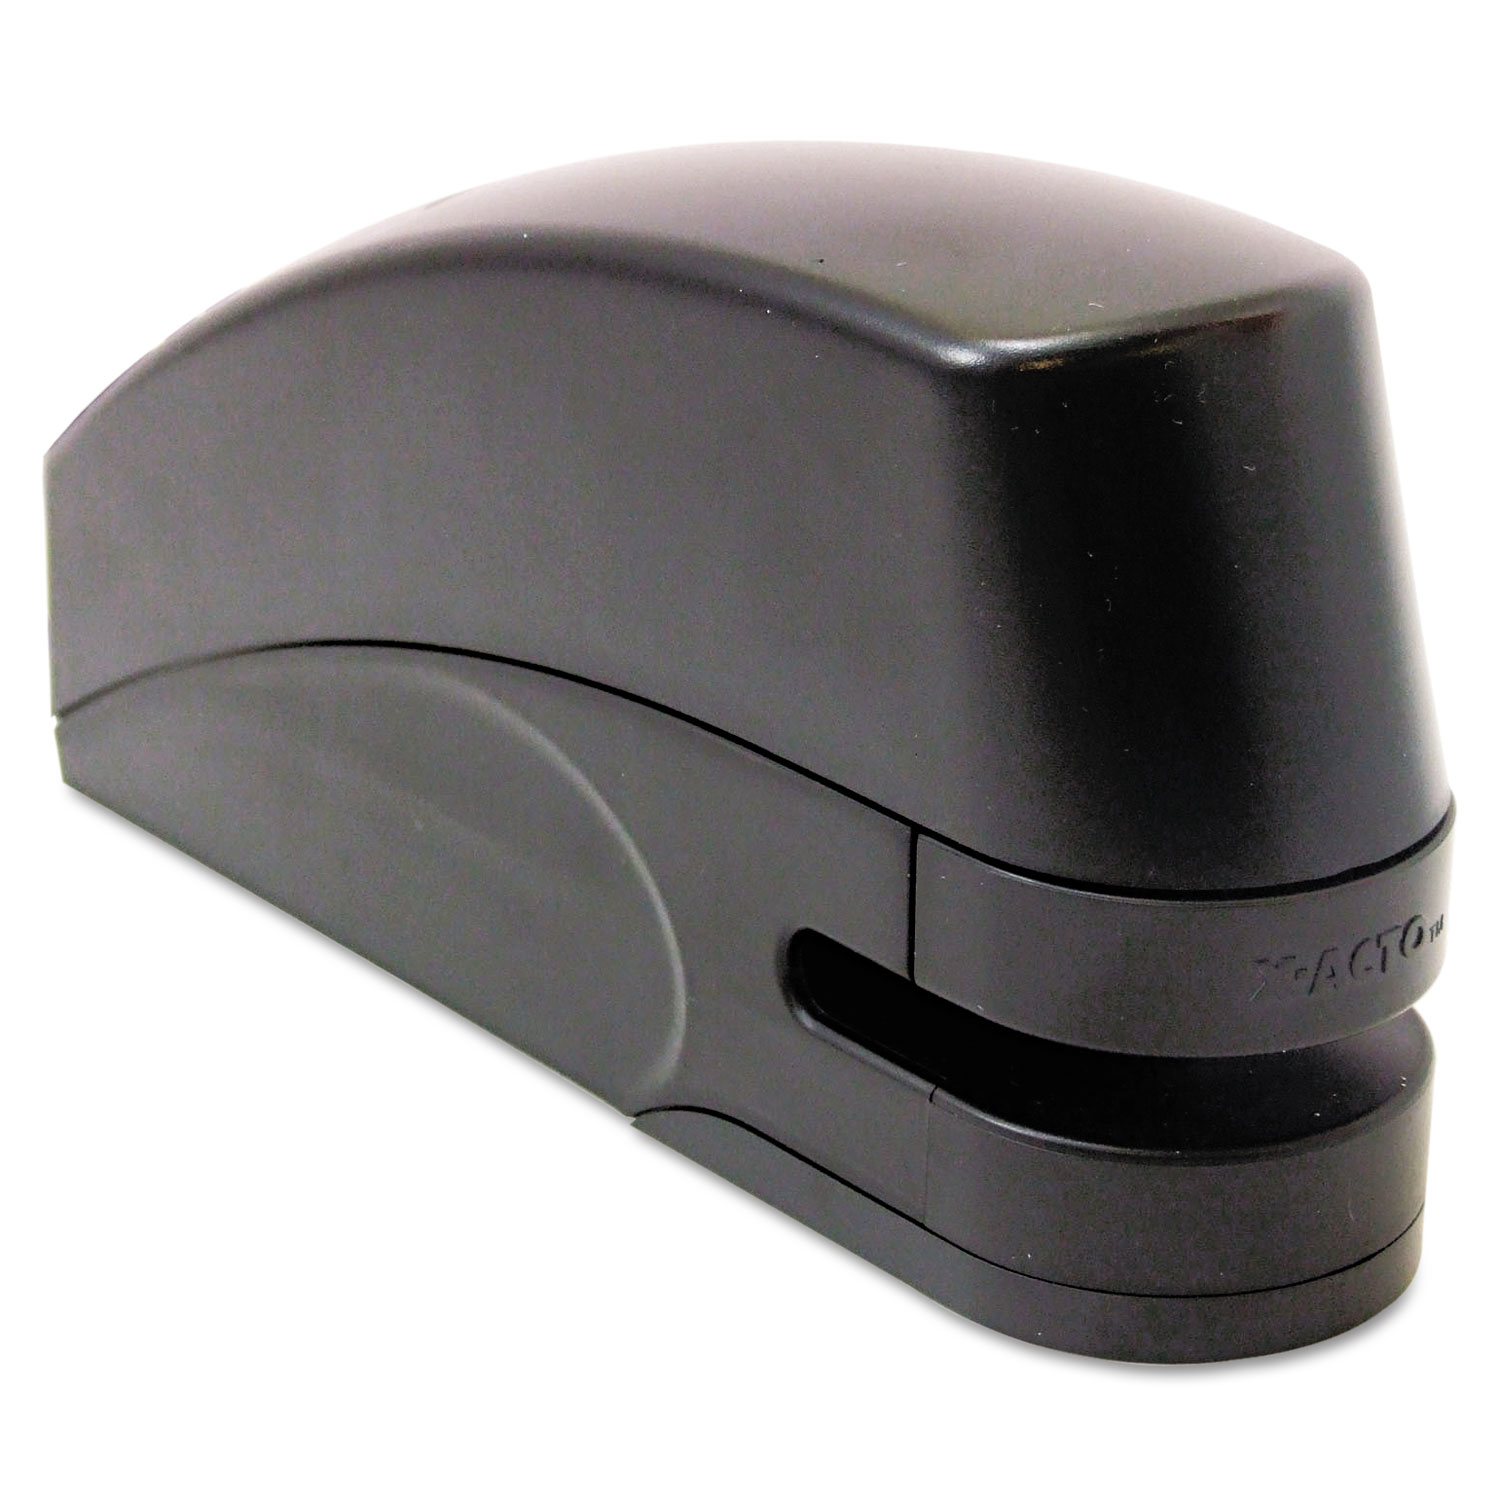  X-ACTO 73101 Electric Stapler with Anti-Jam Mechanism, 20-Sheet Capacity, Black (EPI73101) 